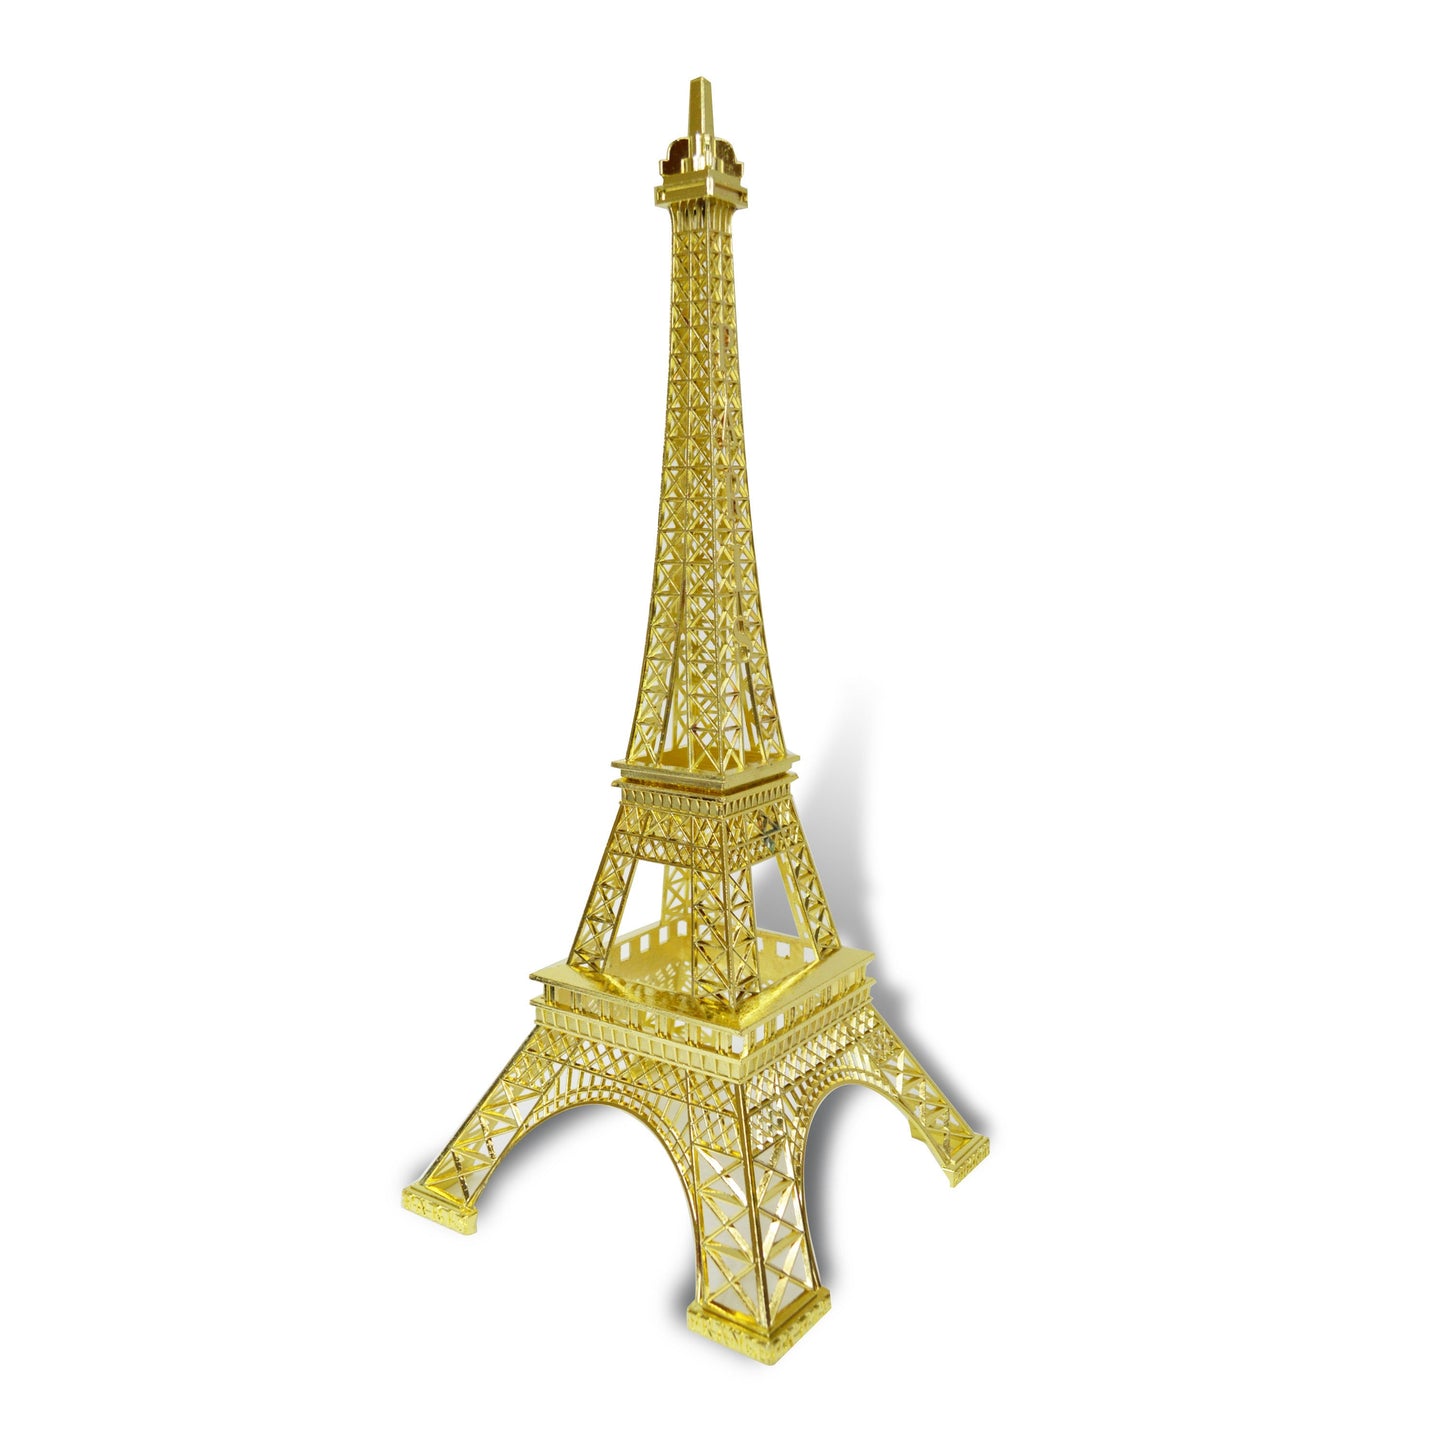 Allgala Eiffel Tower Statue 19" (48cm) Tall Decor Alloy Metal